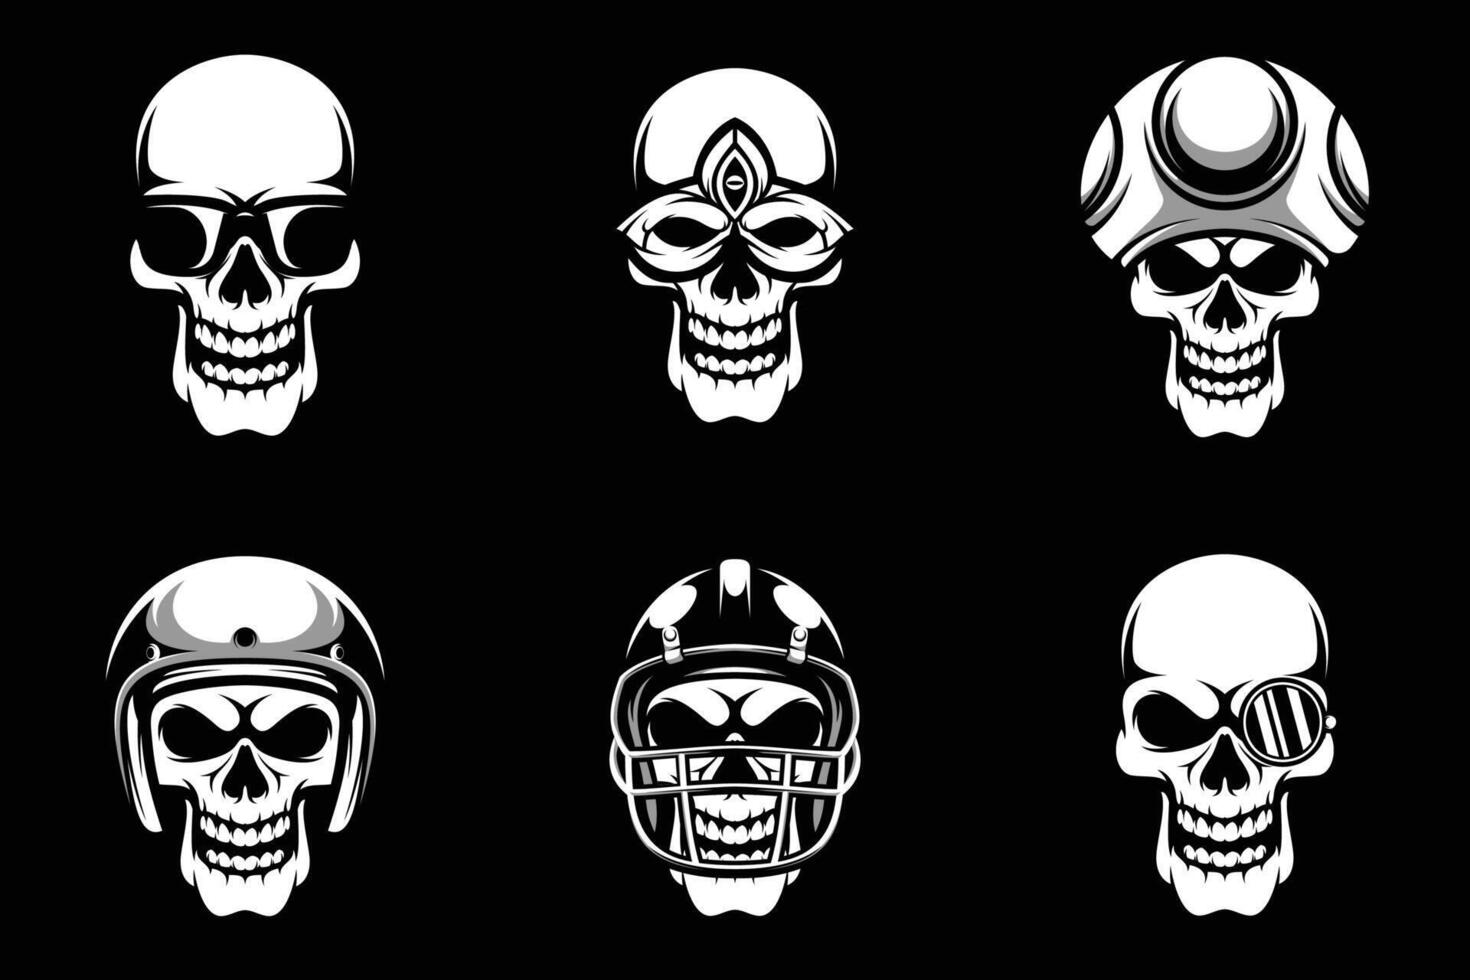 Skull Heads Bundle Black and White vector